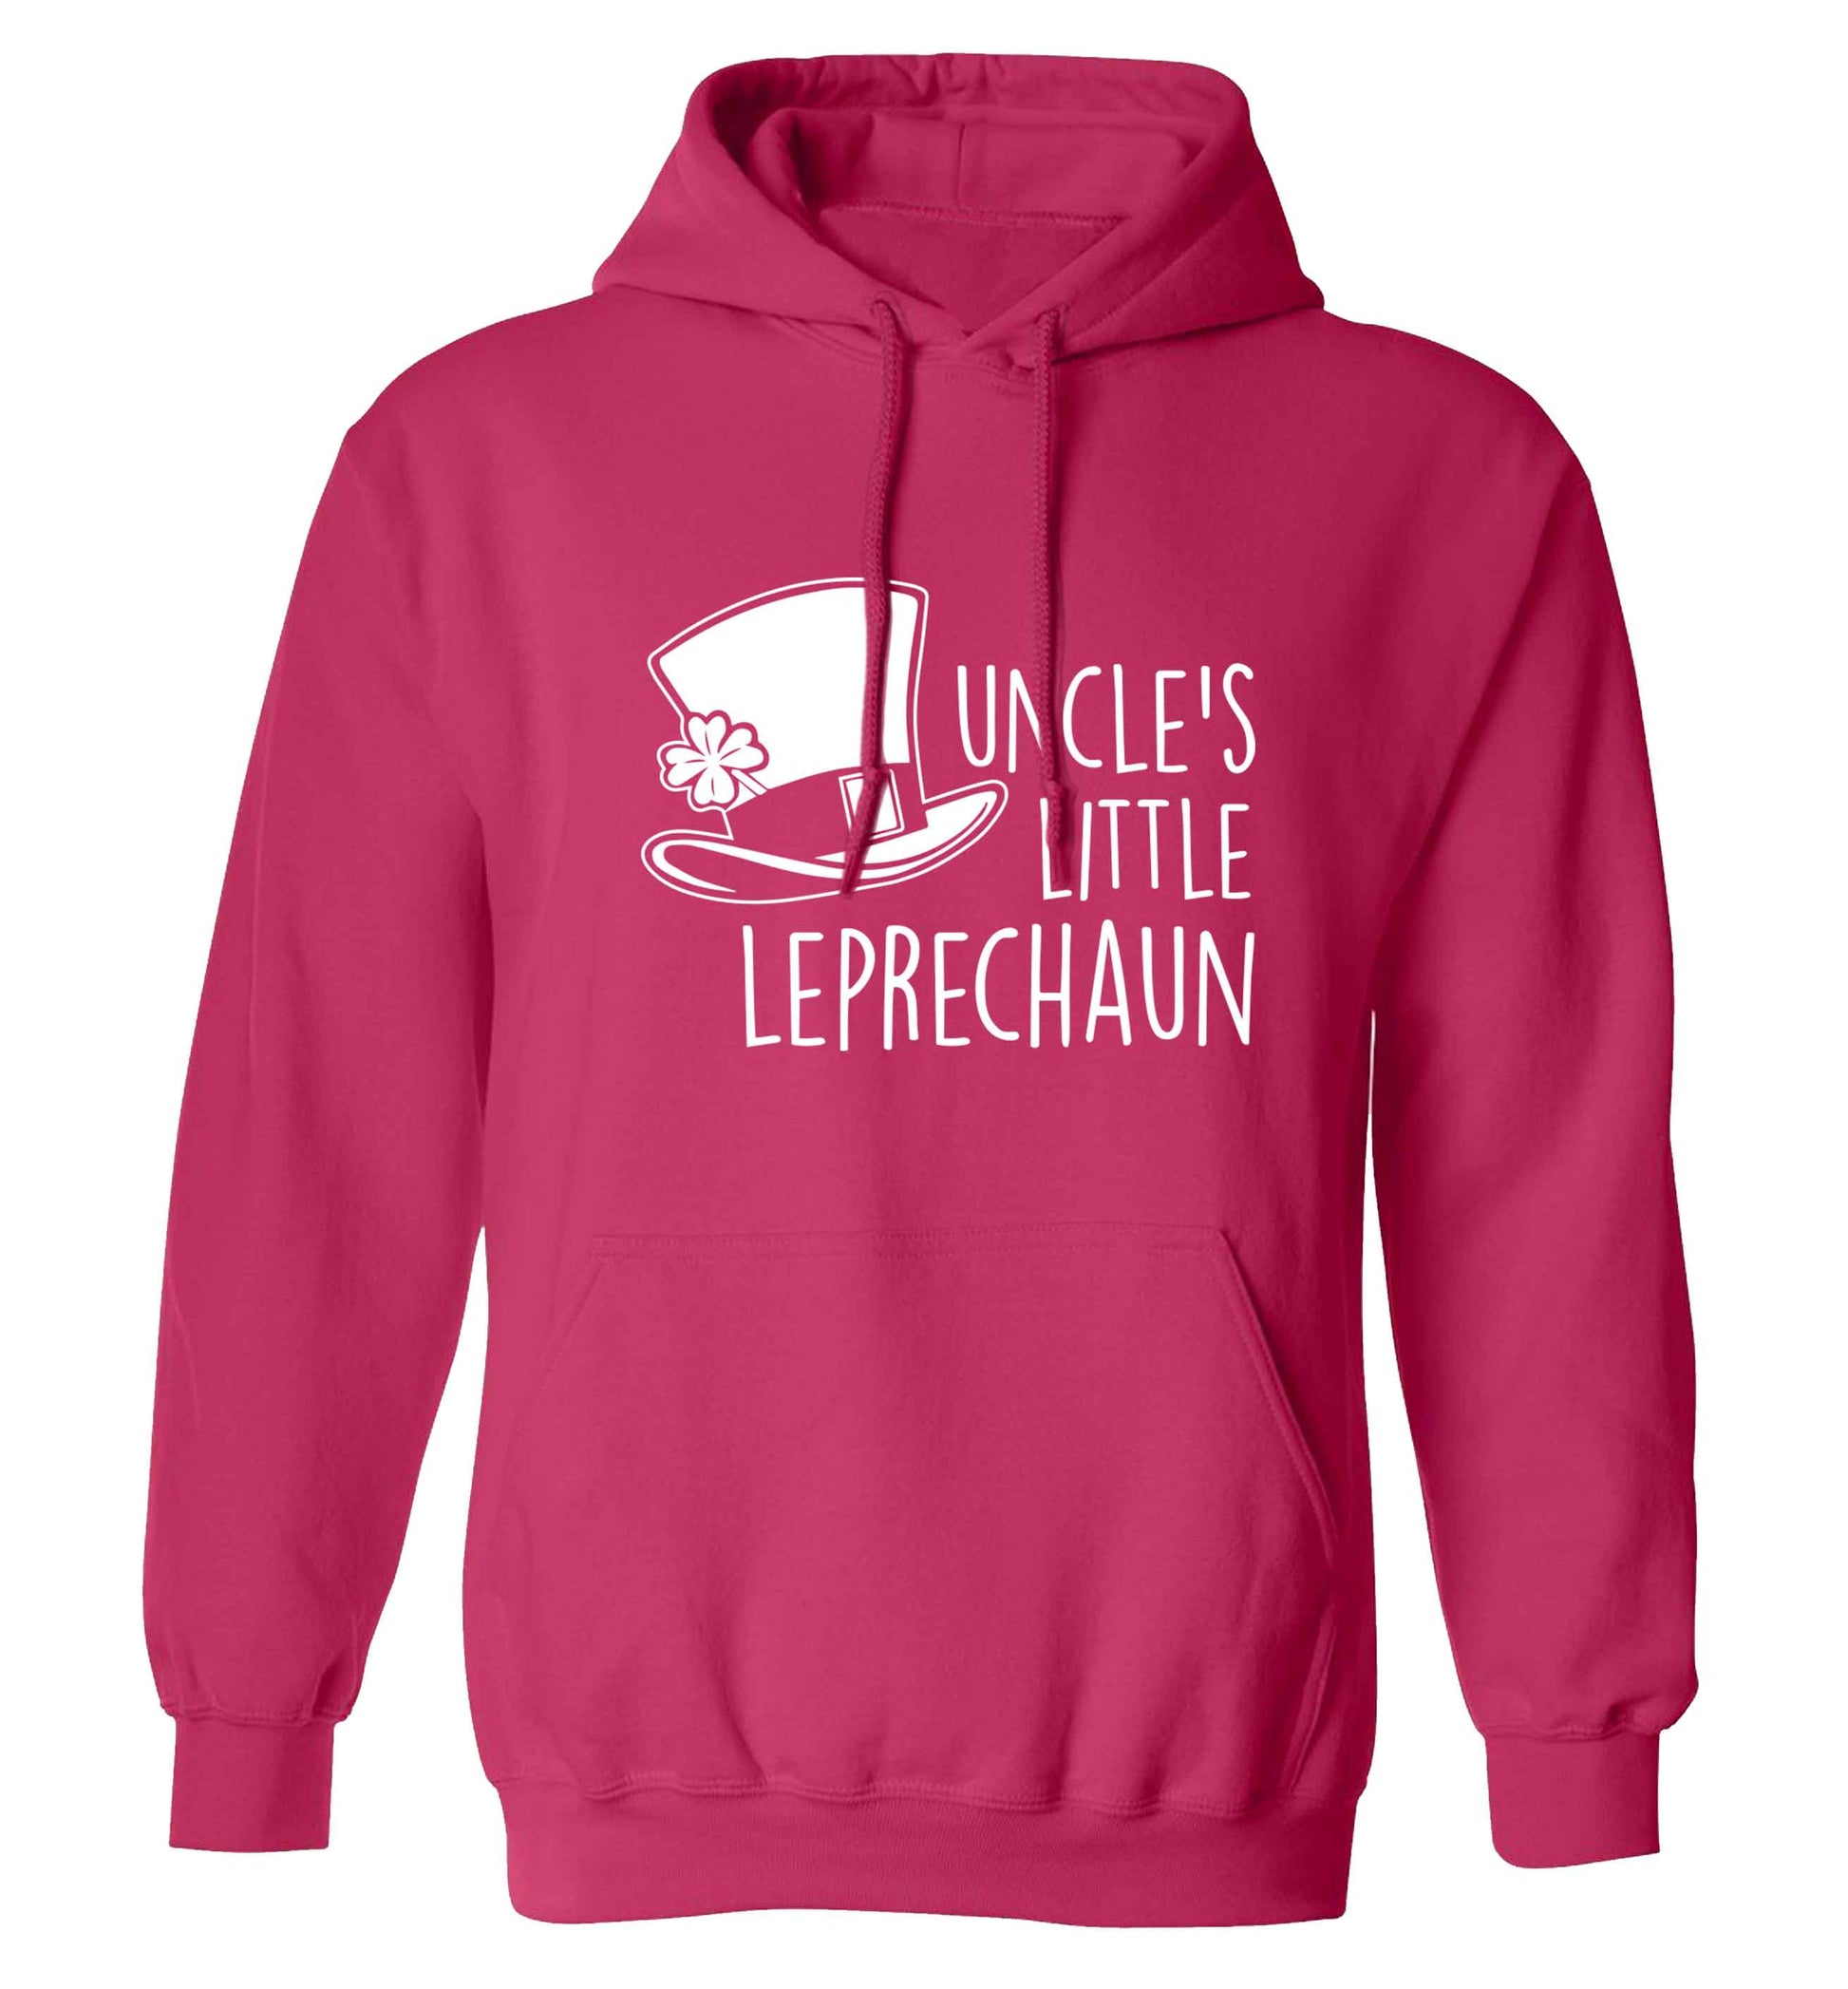 Uncles little leprechaun adults unisex pink hoodie 2XL